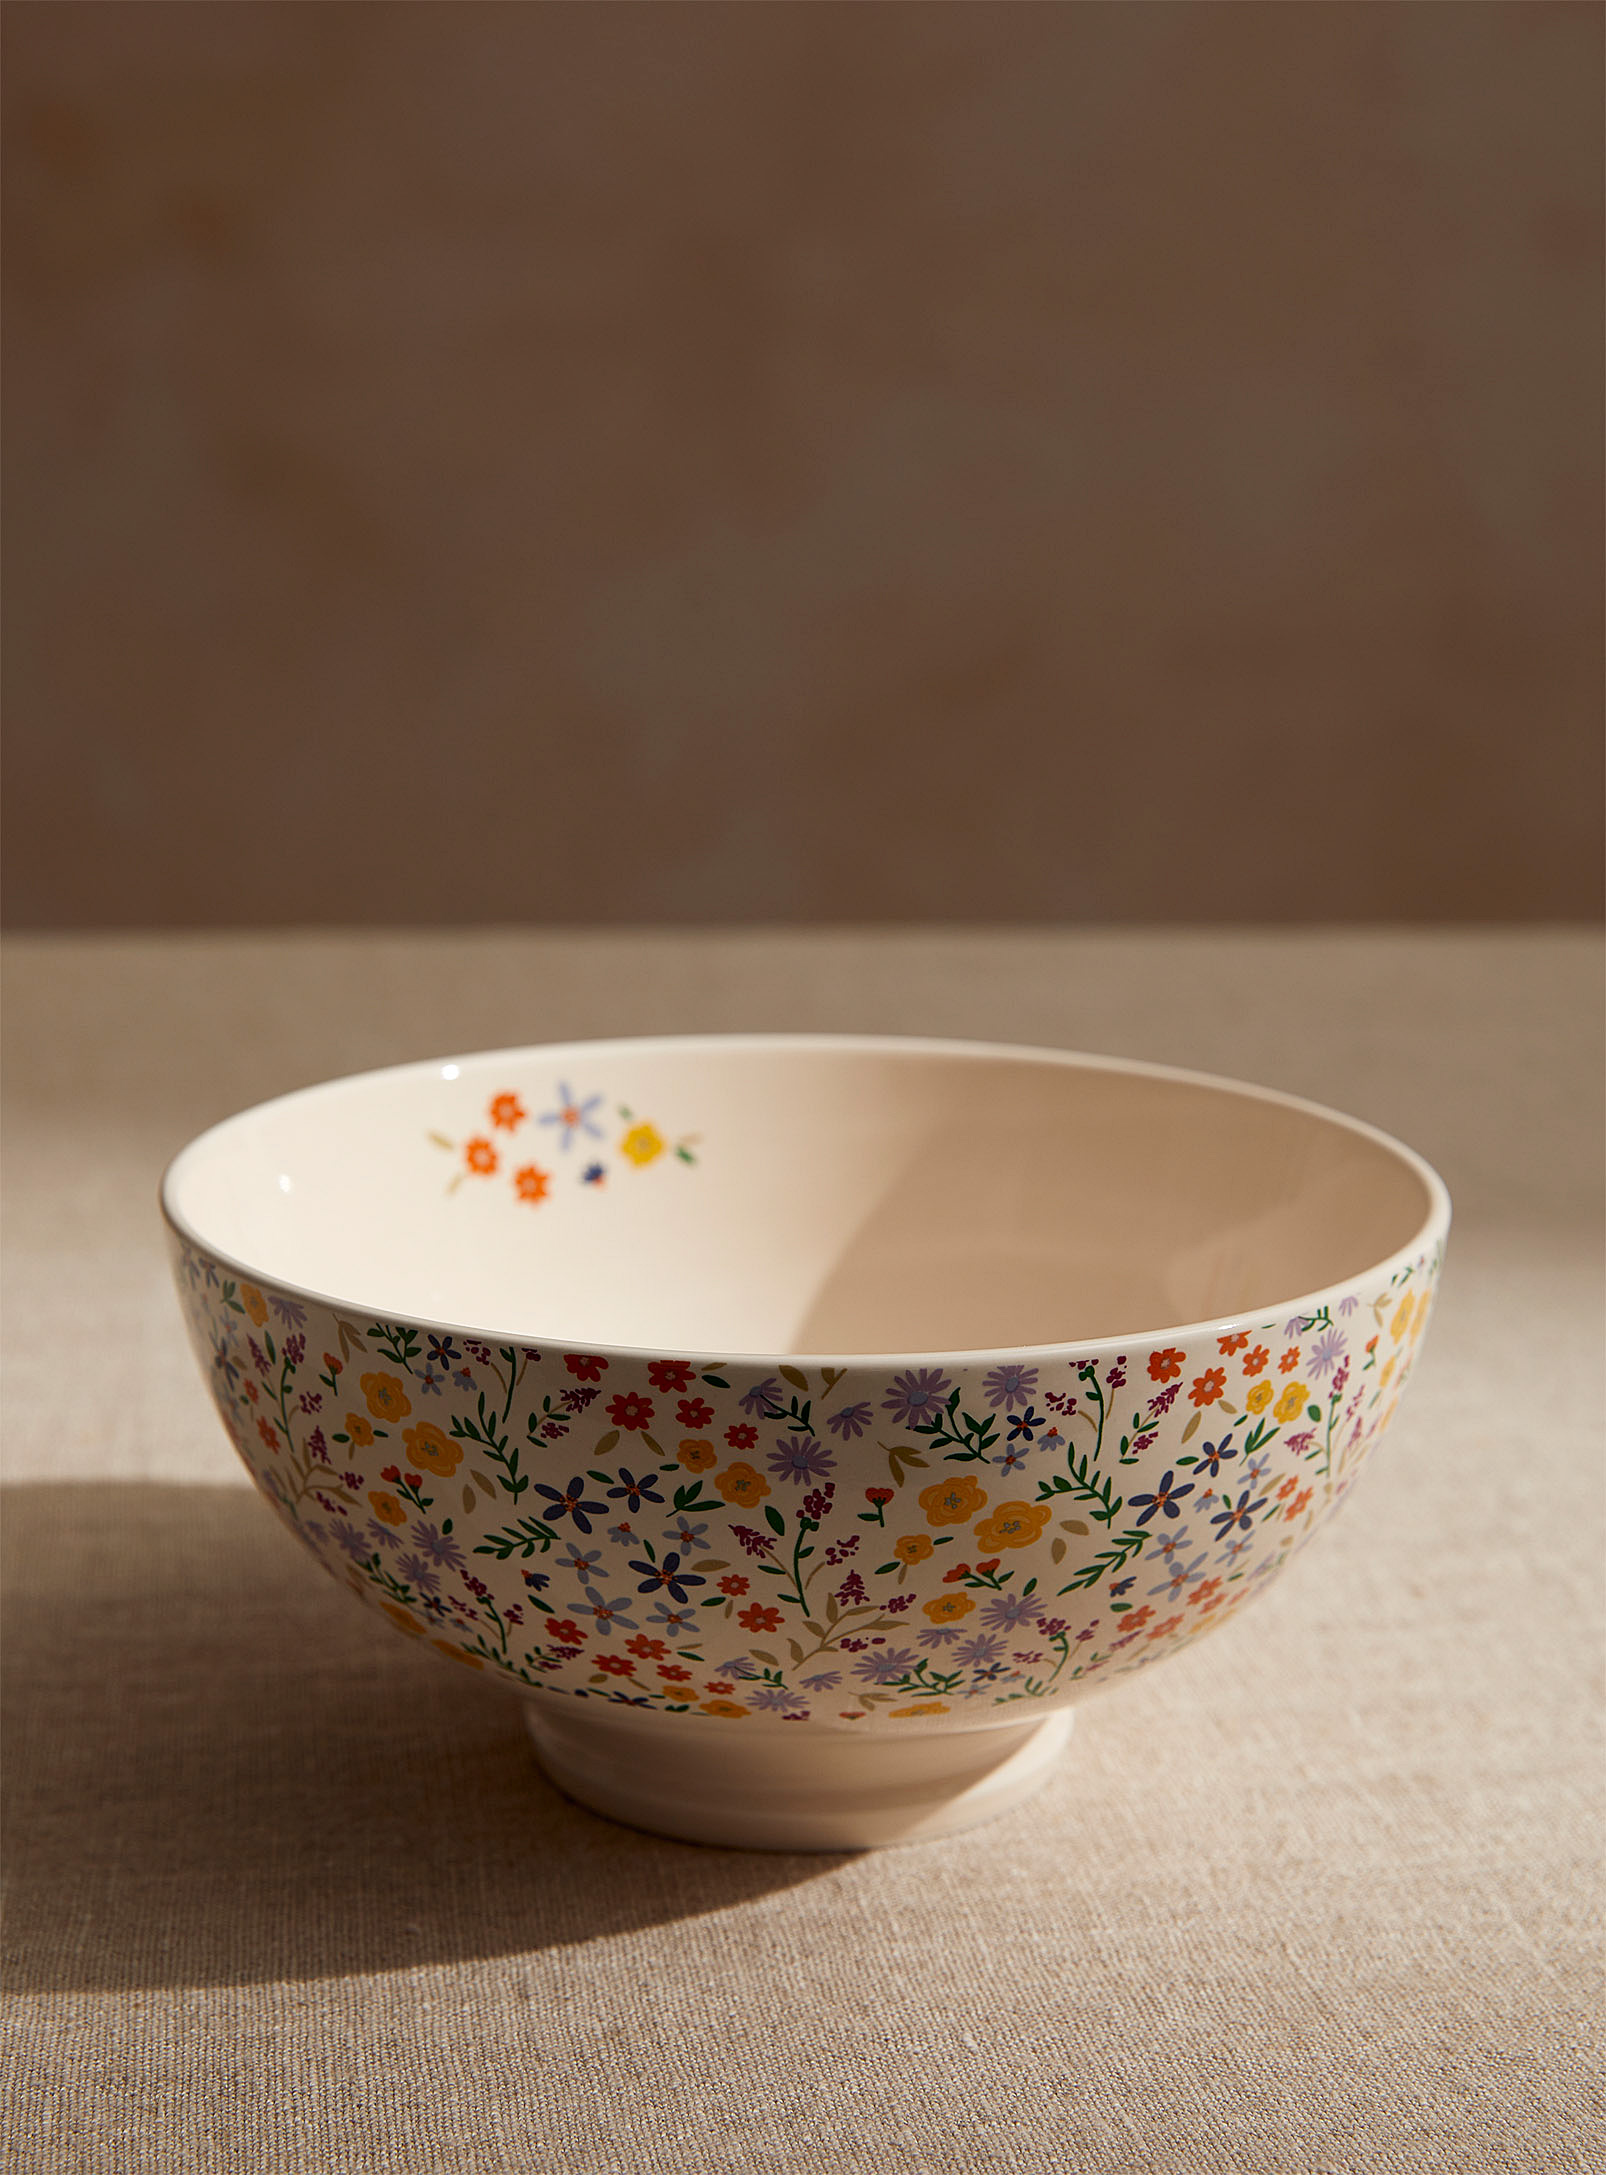 Simons Maison - Countryside flowers large bowl